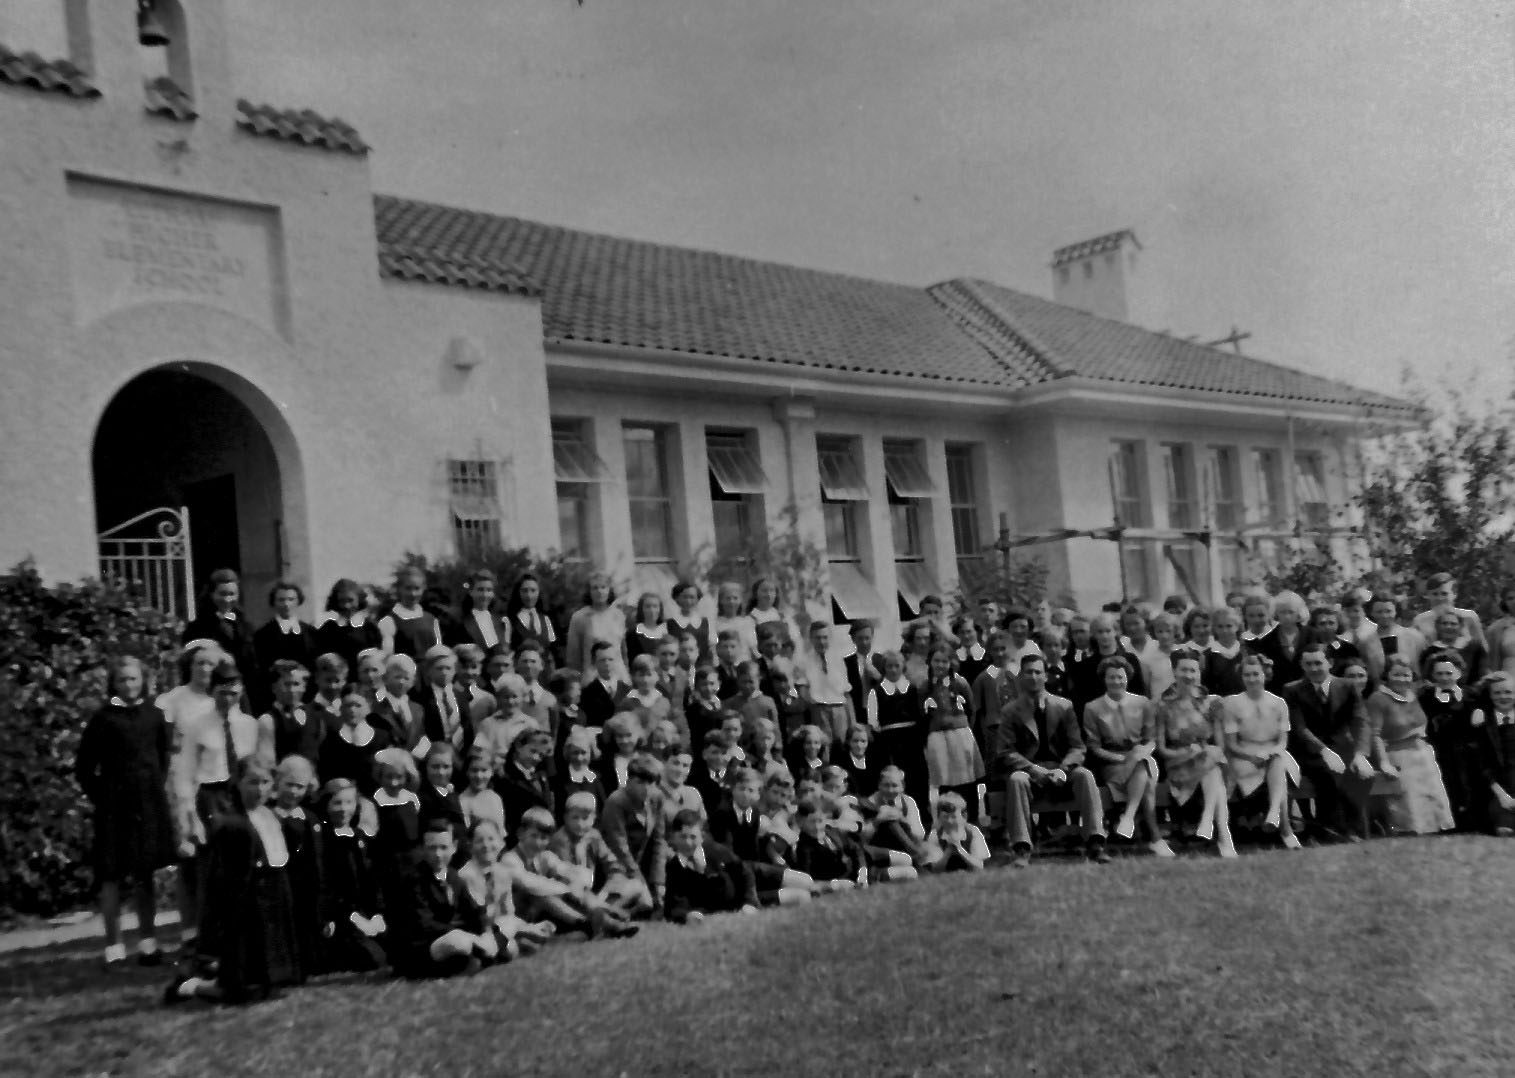 Eltham High School | The Foundation Years: 1926 – 1930